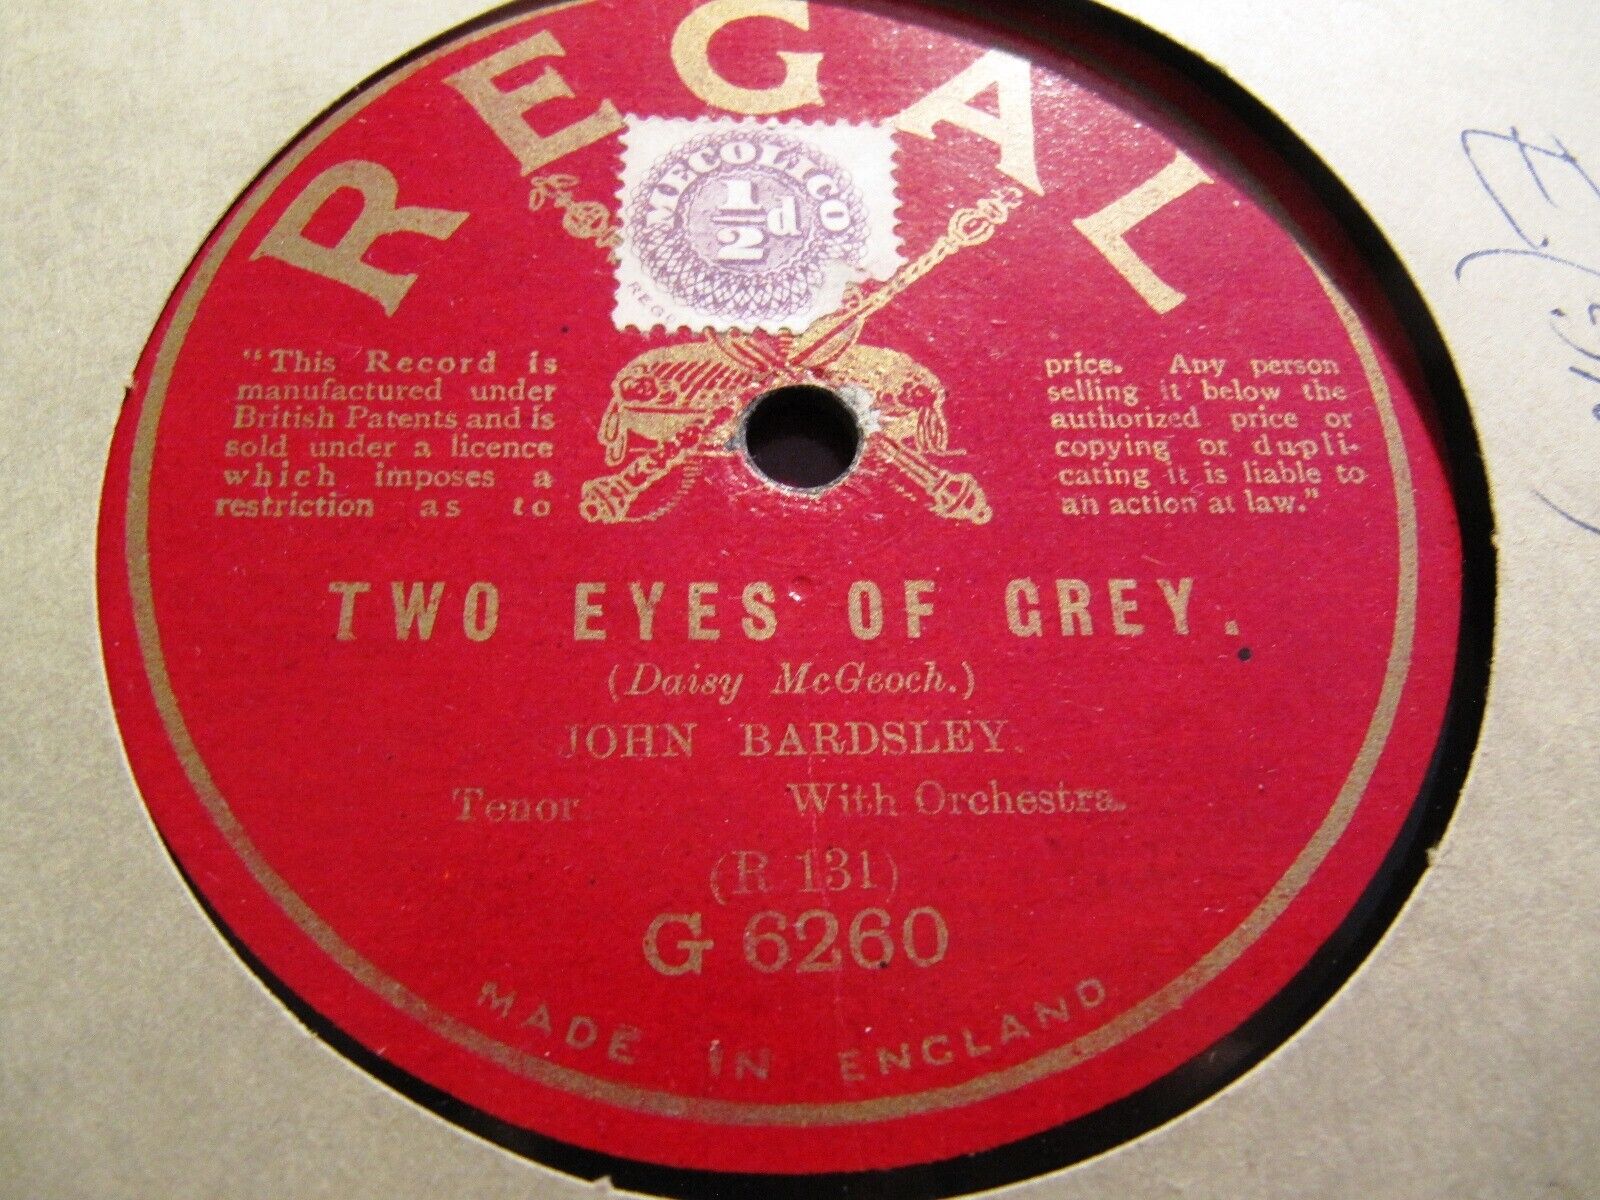 1914 JOHN BARDSLEY tenor My Love\'s Grey Eyes / Two Eyes of Grey REGAL G 6260